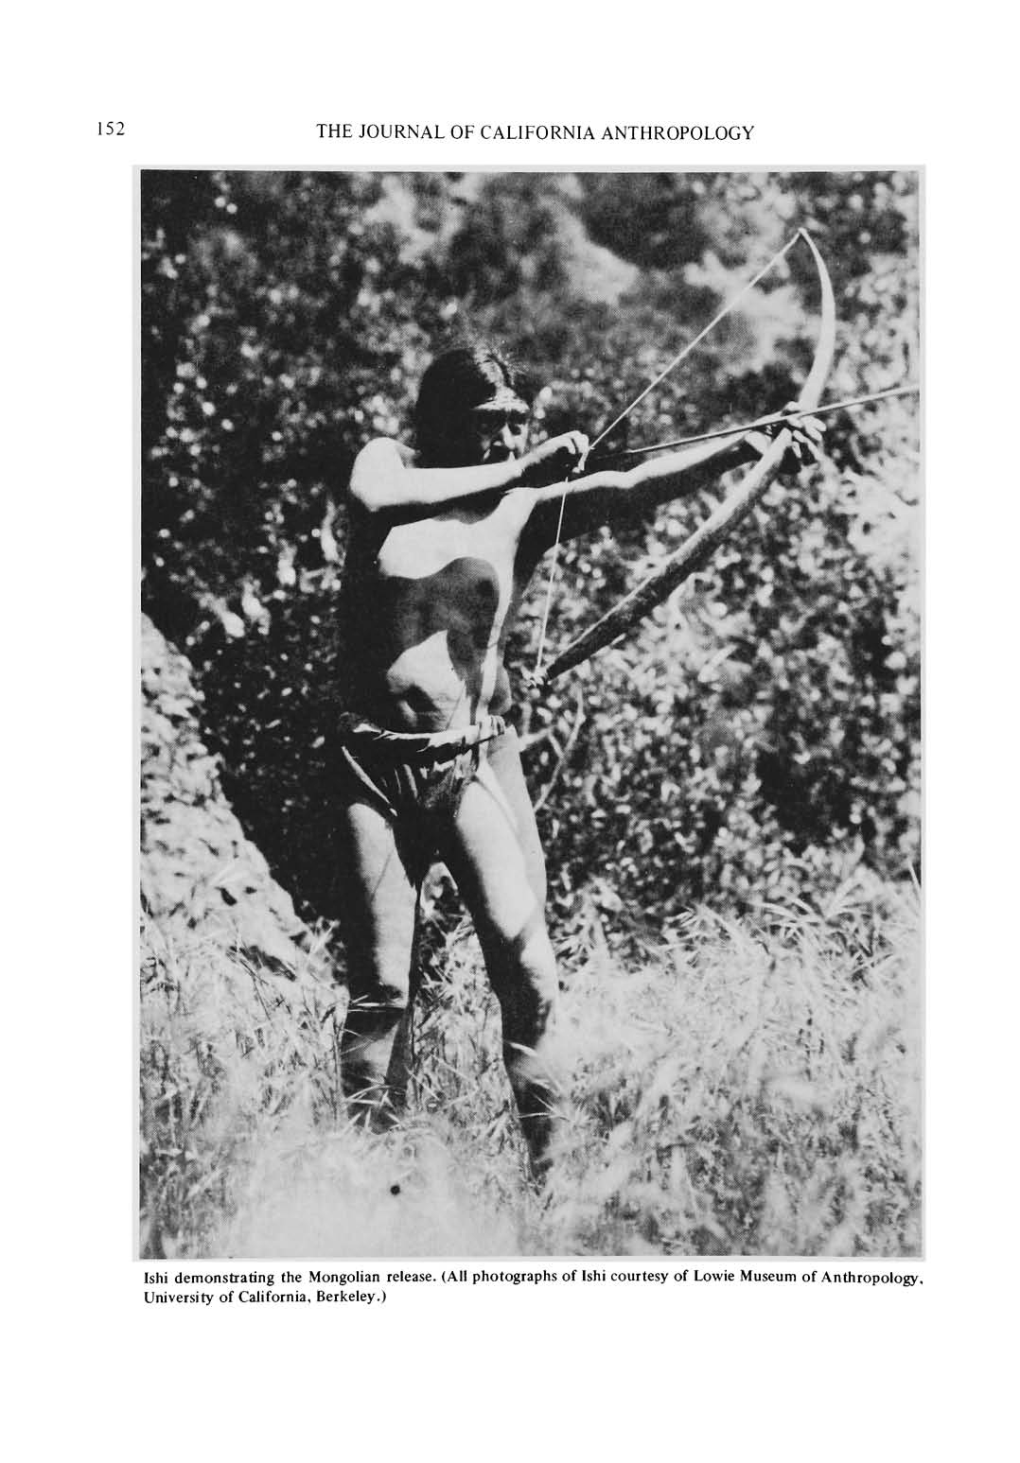 Hunting with Ishi - the Last Yana Indian